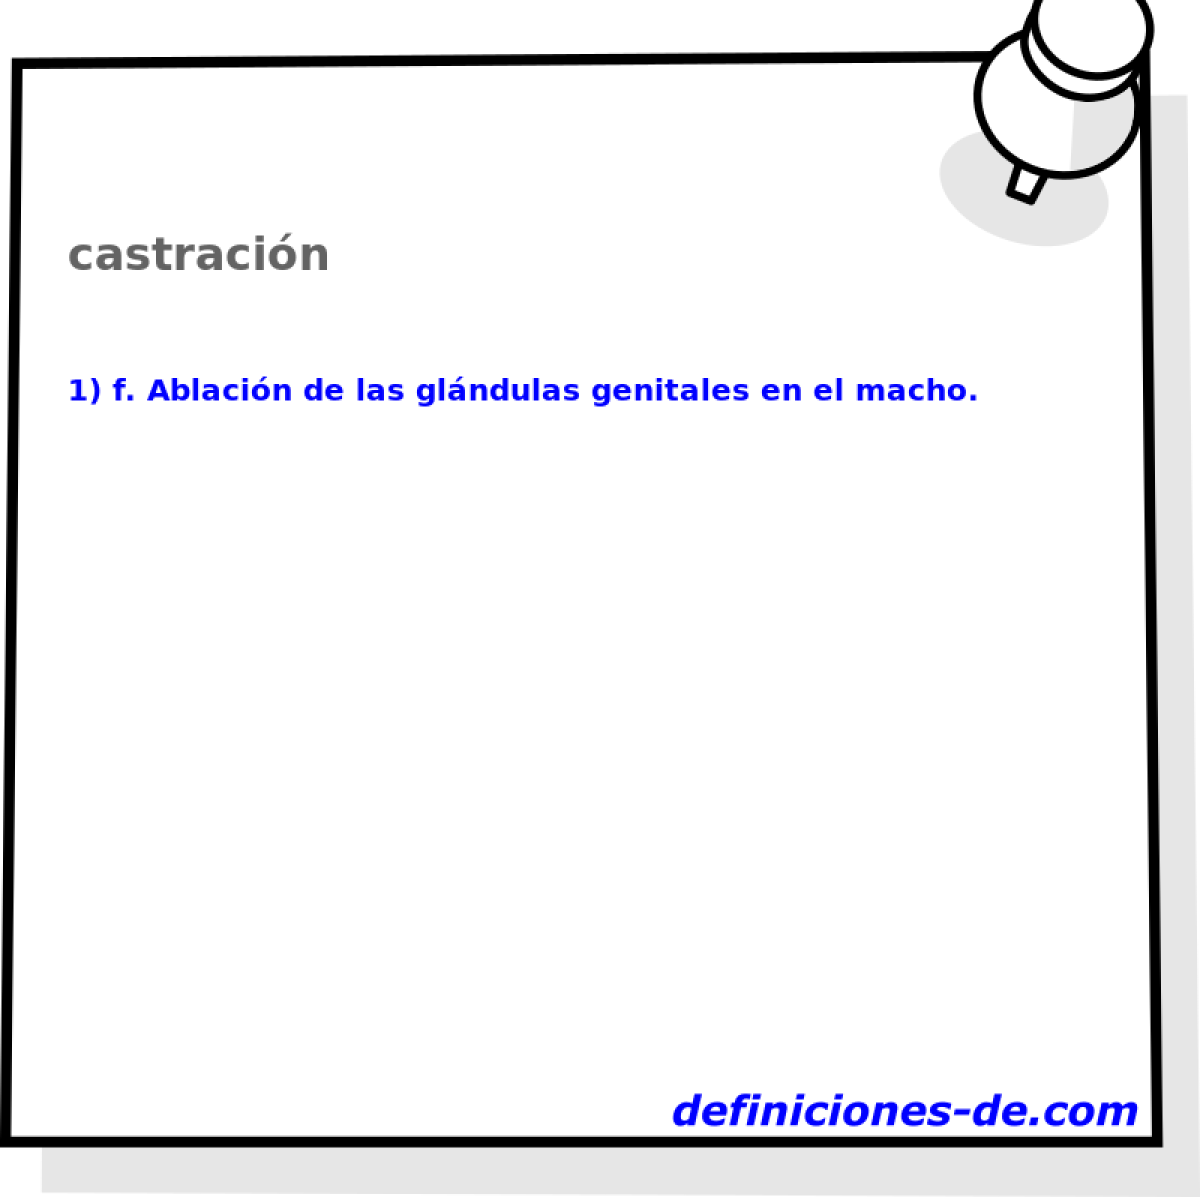 castracin 